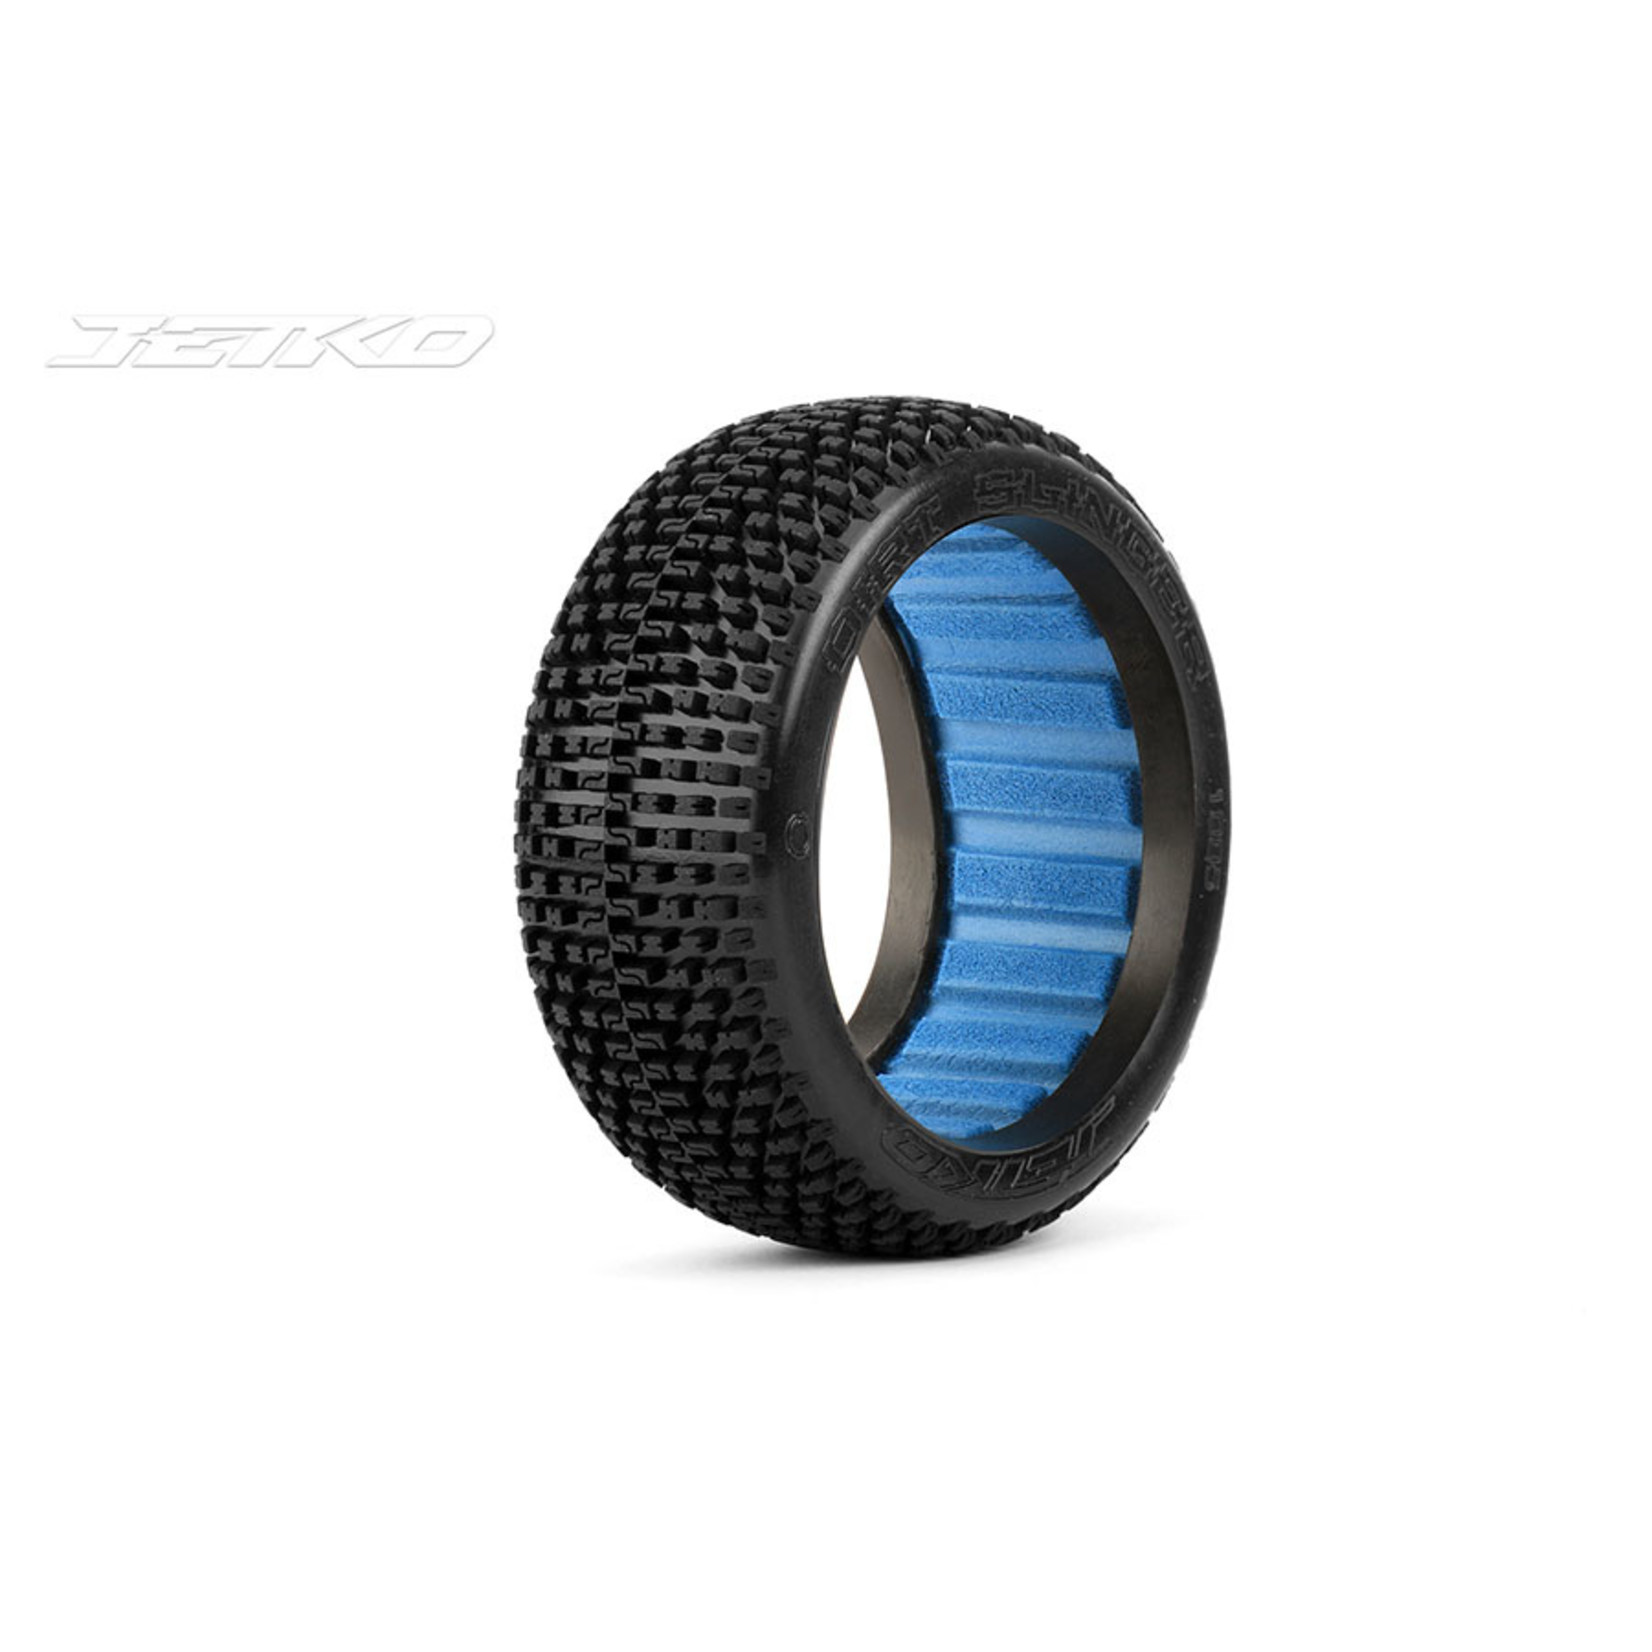 Jetko Tires Jetko Dirt Slinger 1/8 Medium Soft Buggy Tires (Blue Grey) (2) #1005MS6201BG